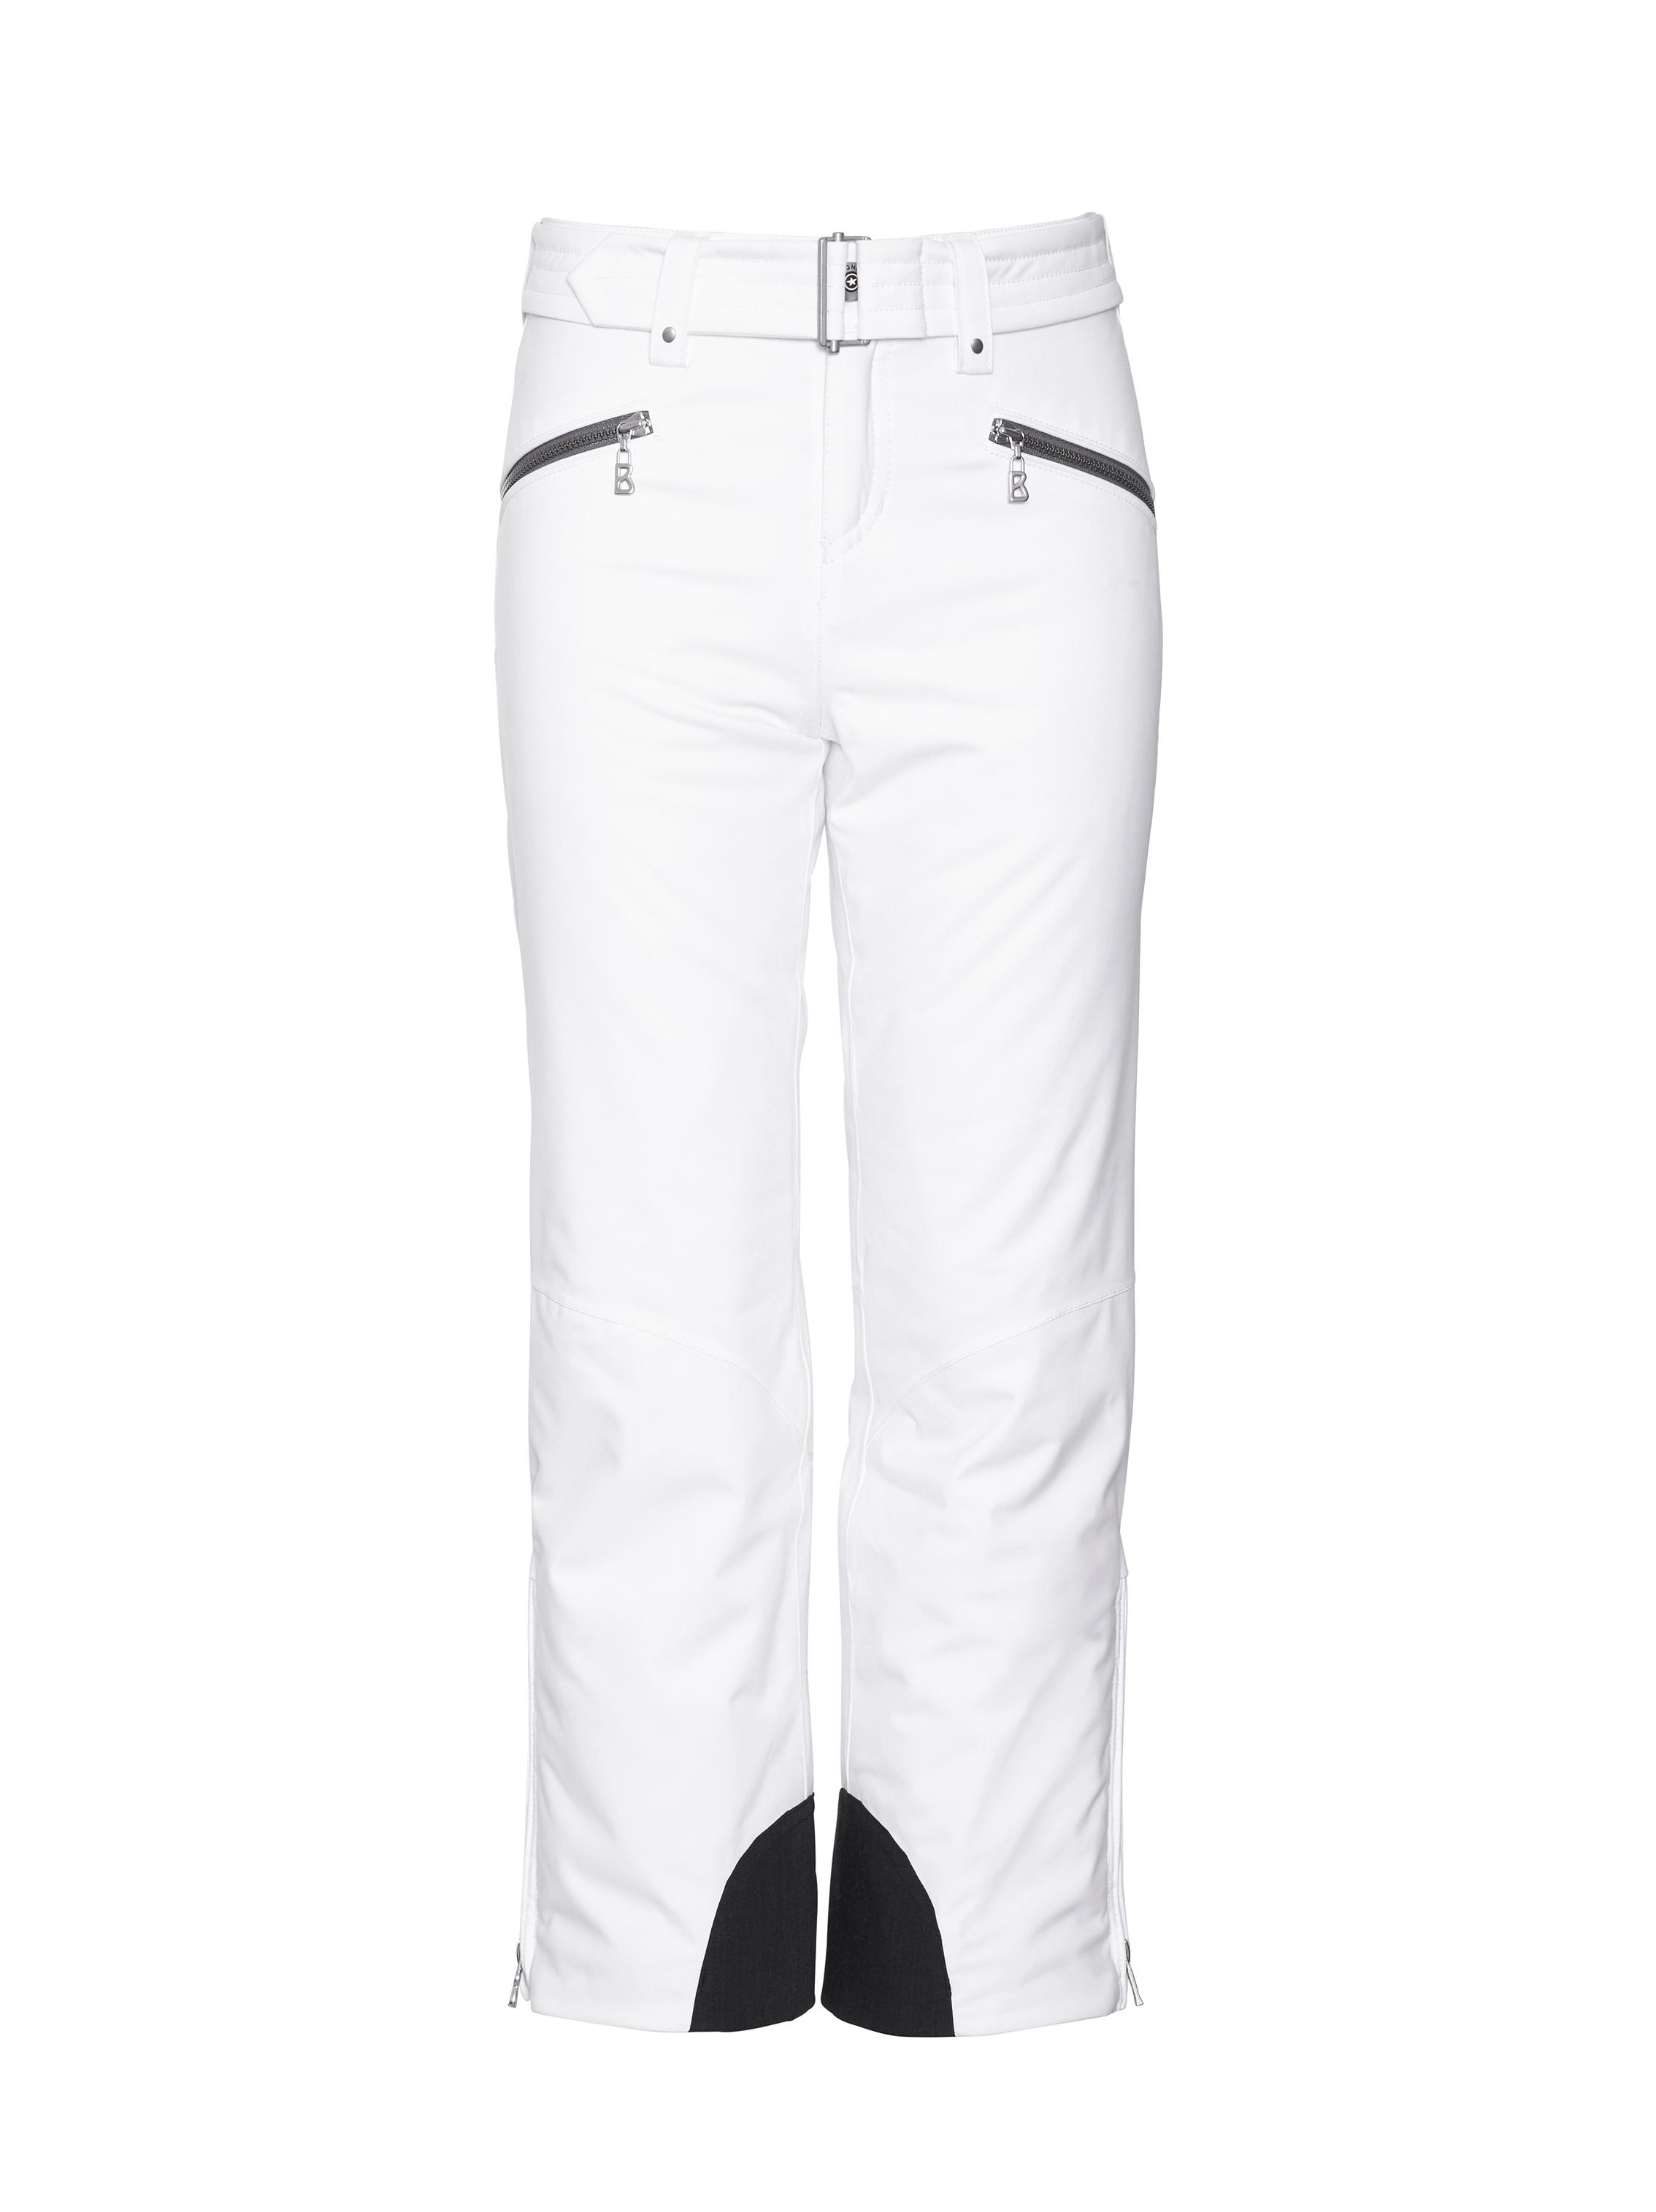 Bogner Ski Pants Adora in White | Lyst